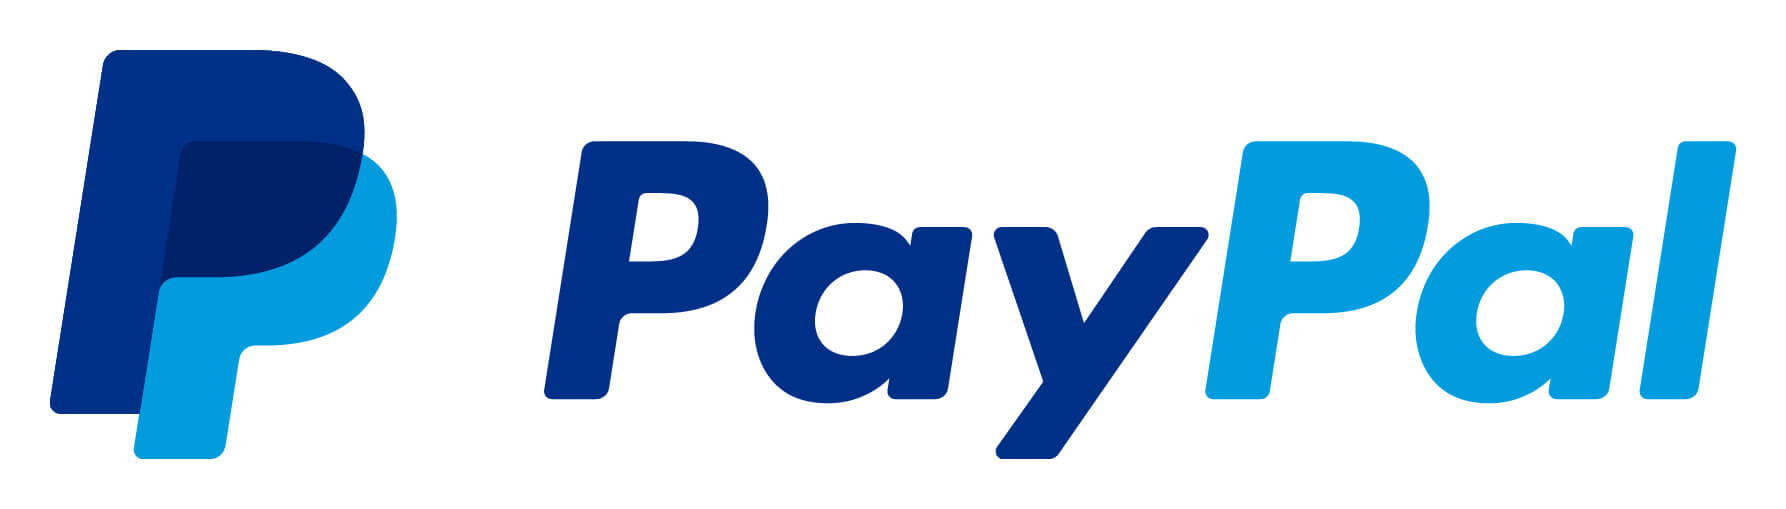 PayPal logo - PayPal.com